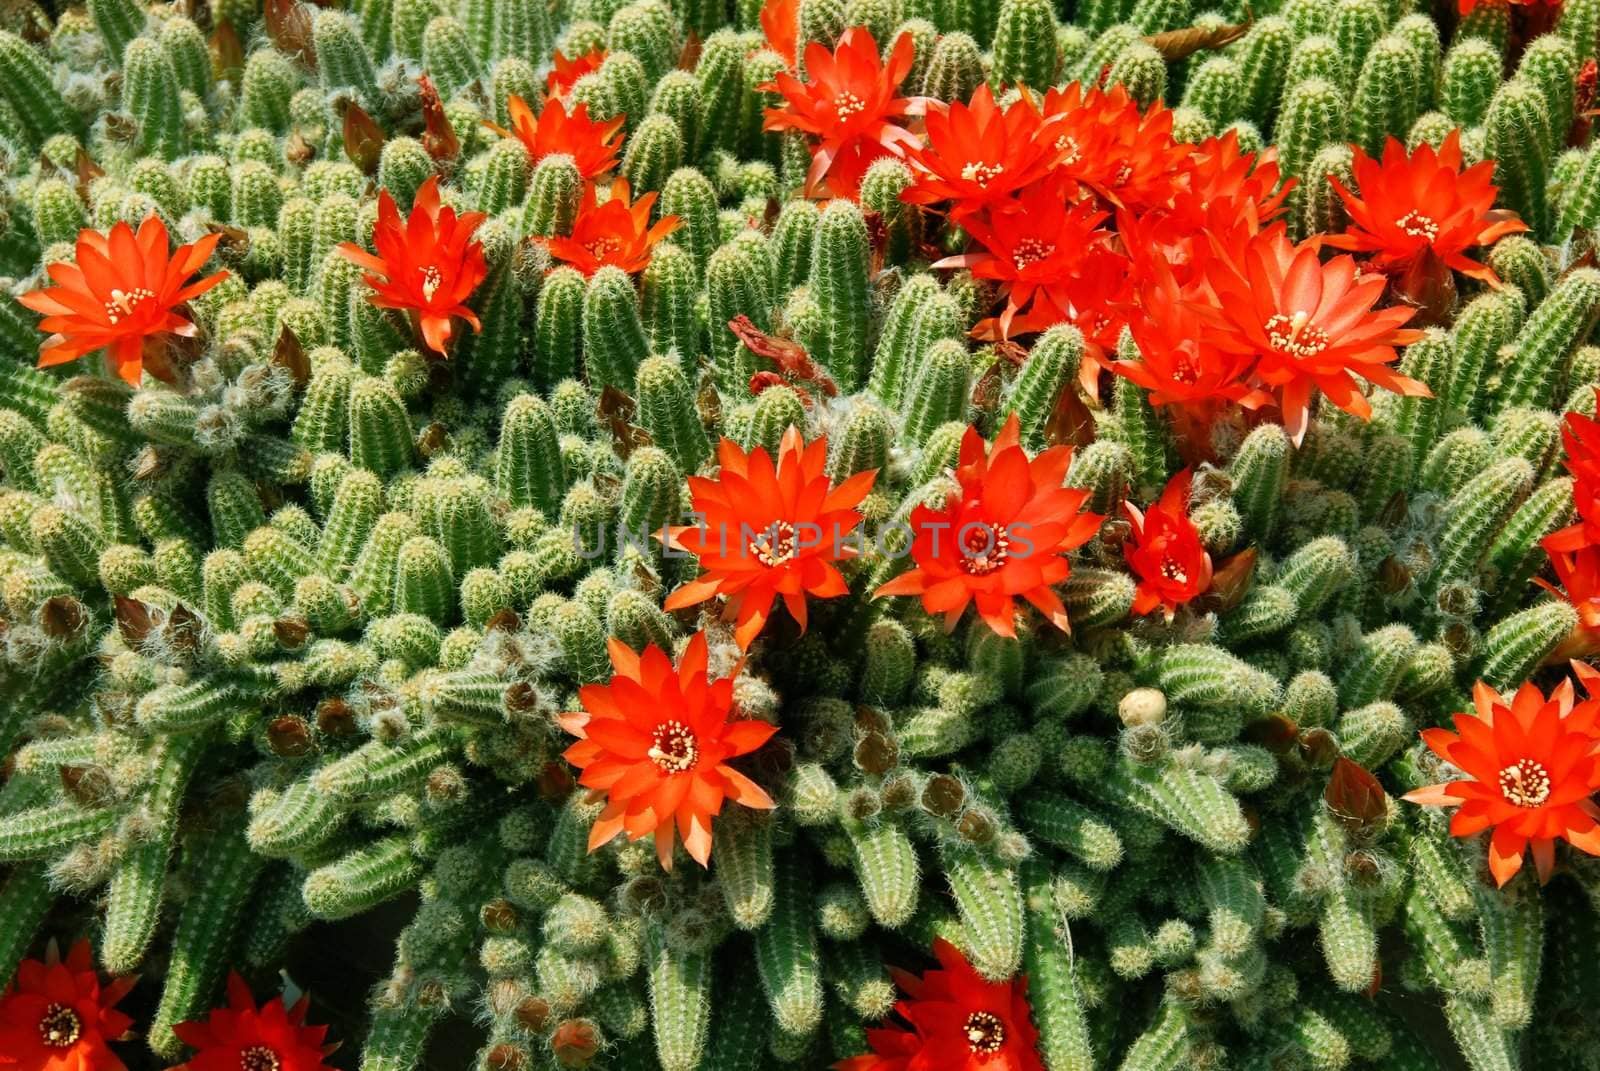 blooming flowers of Red Torch Cactus, Echinopsis huascha